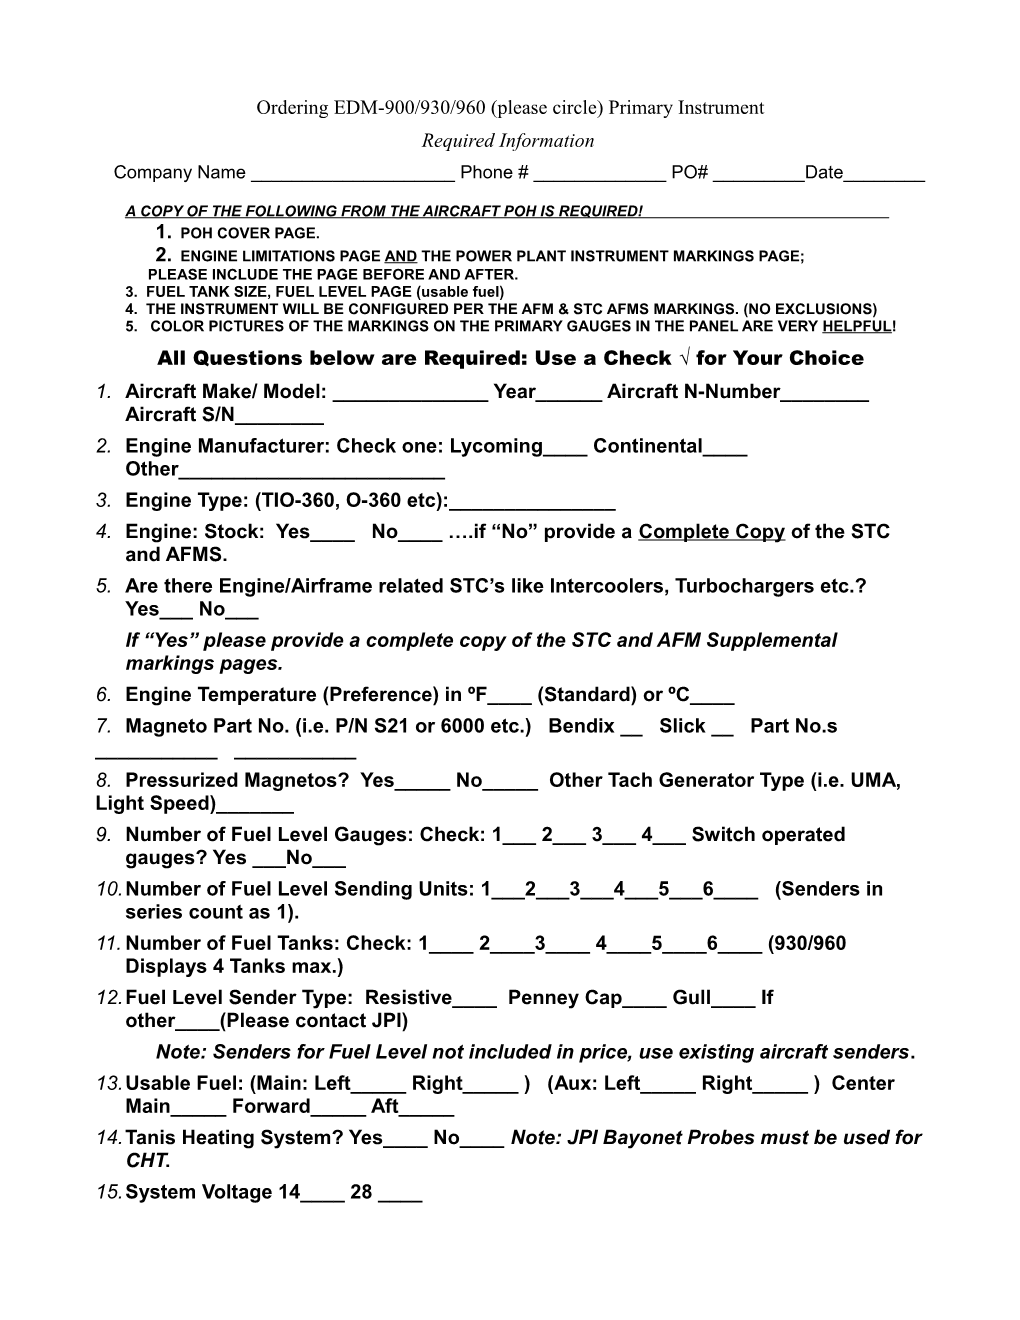 JPI FAX Order Form